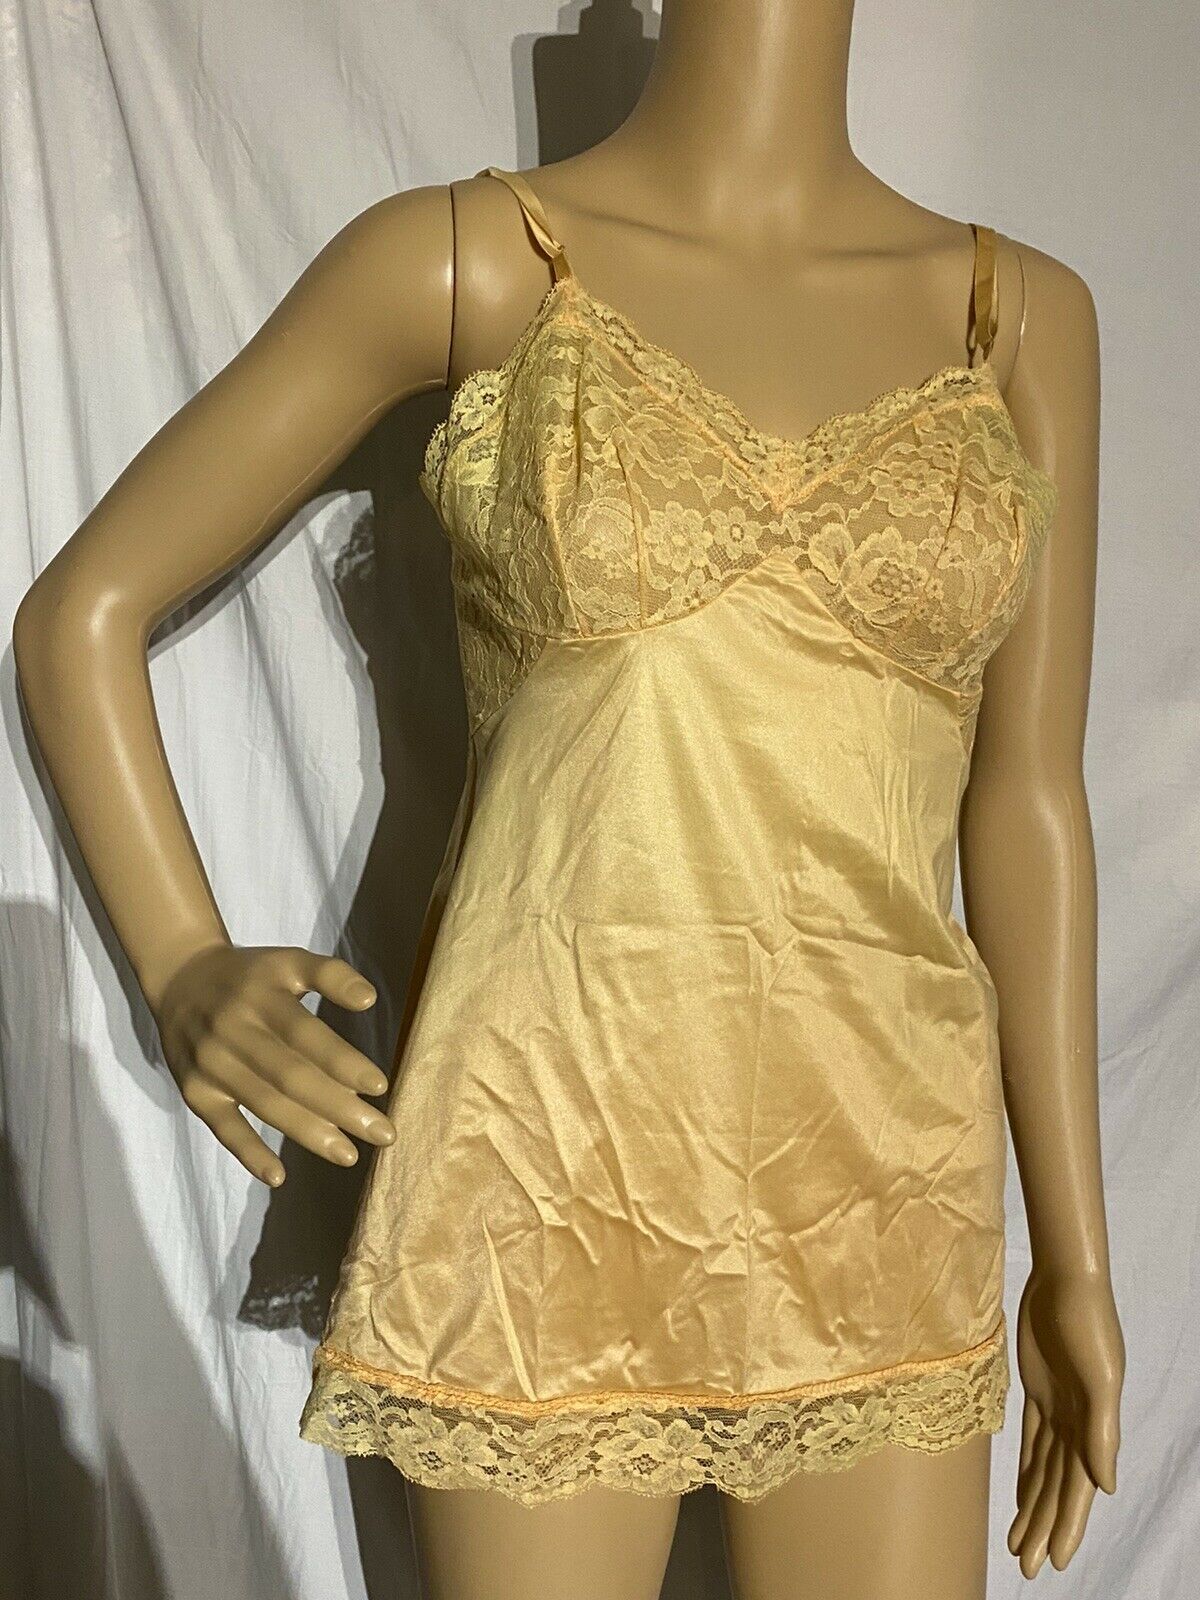 Vintage Vanity Fair Nylon Camisole Slip Top Marigold Yellow Lacey No Tags